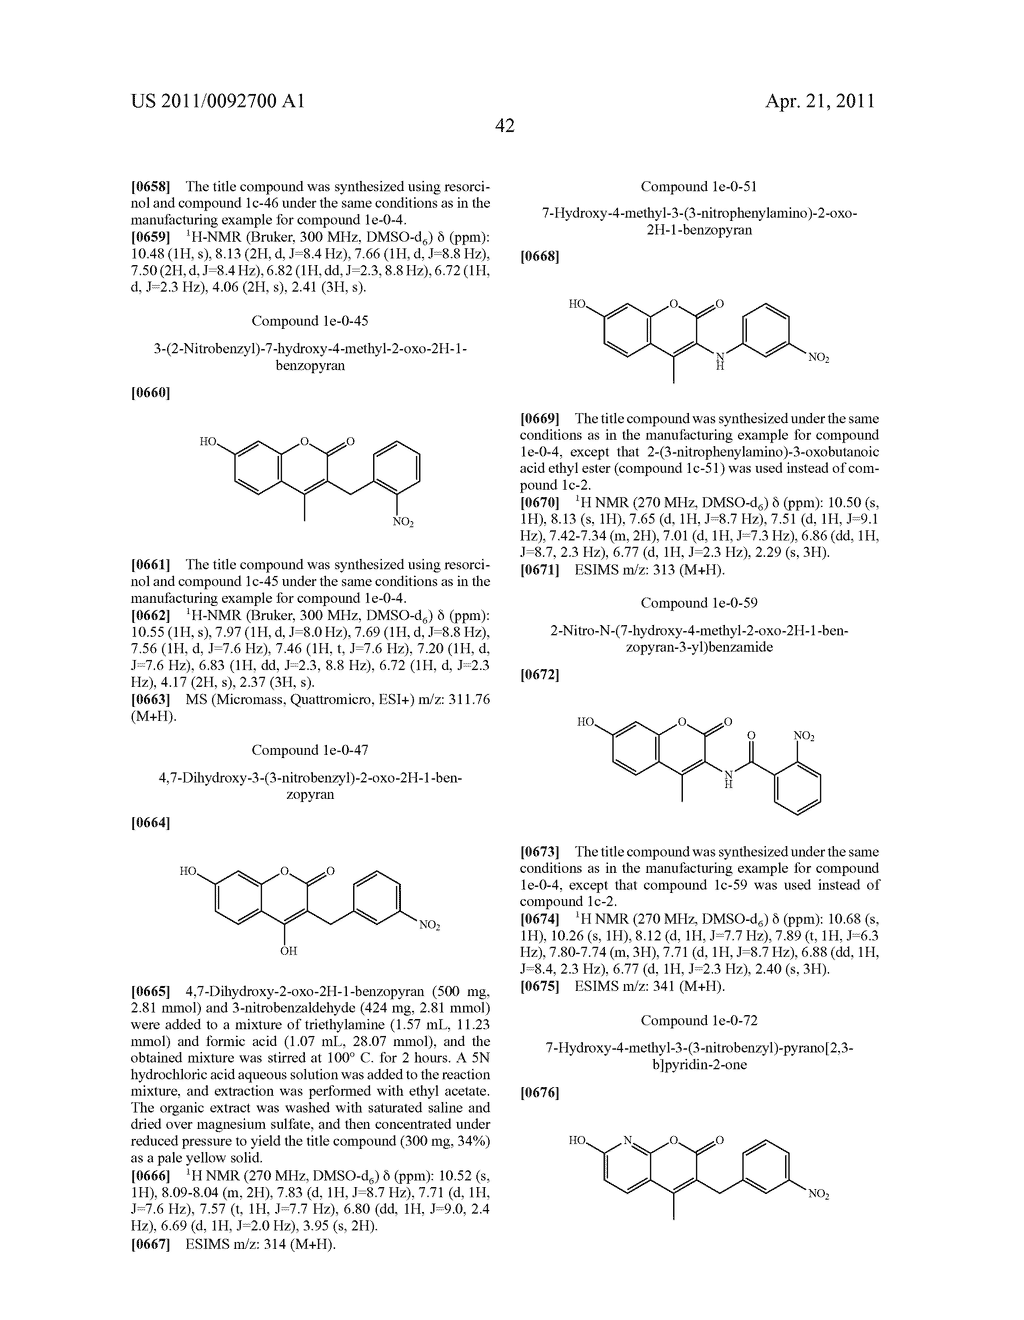 Novel Coumarin Derivative Having Antitumor Activity - diagram, schematic, and image 43